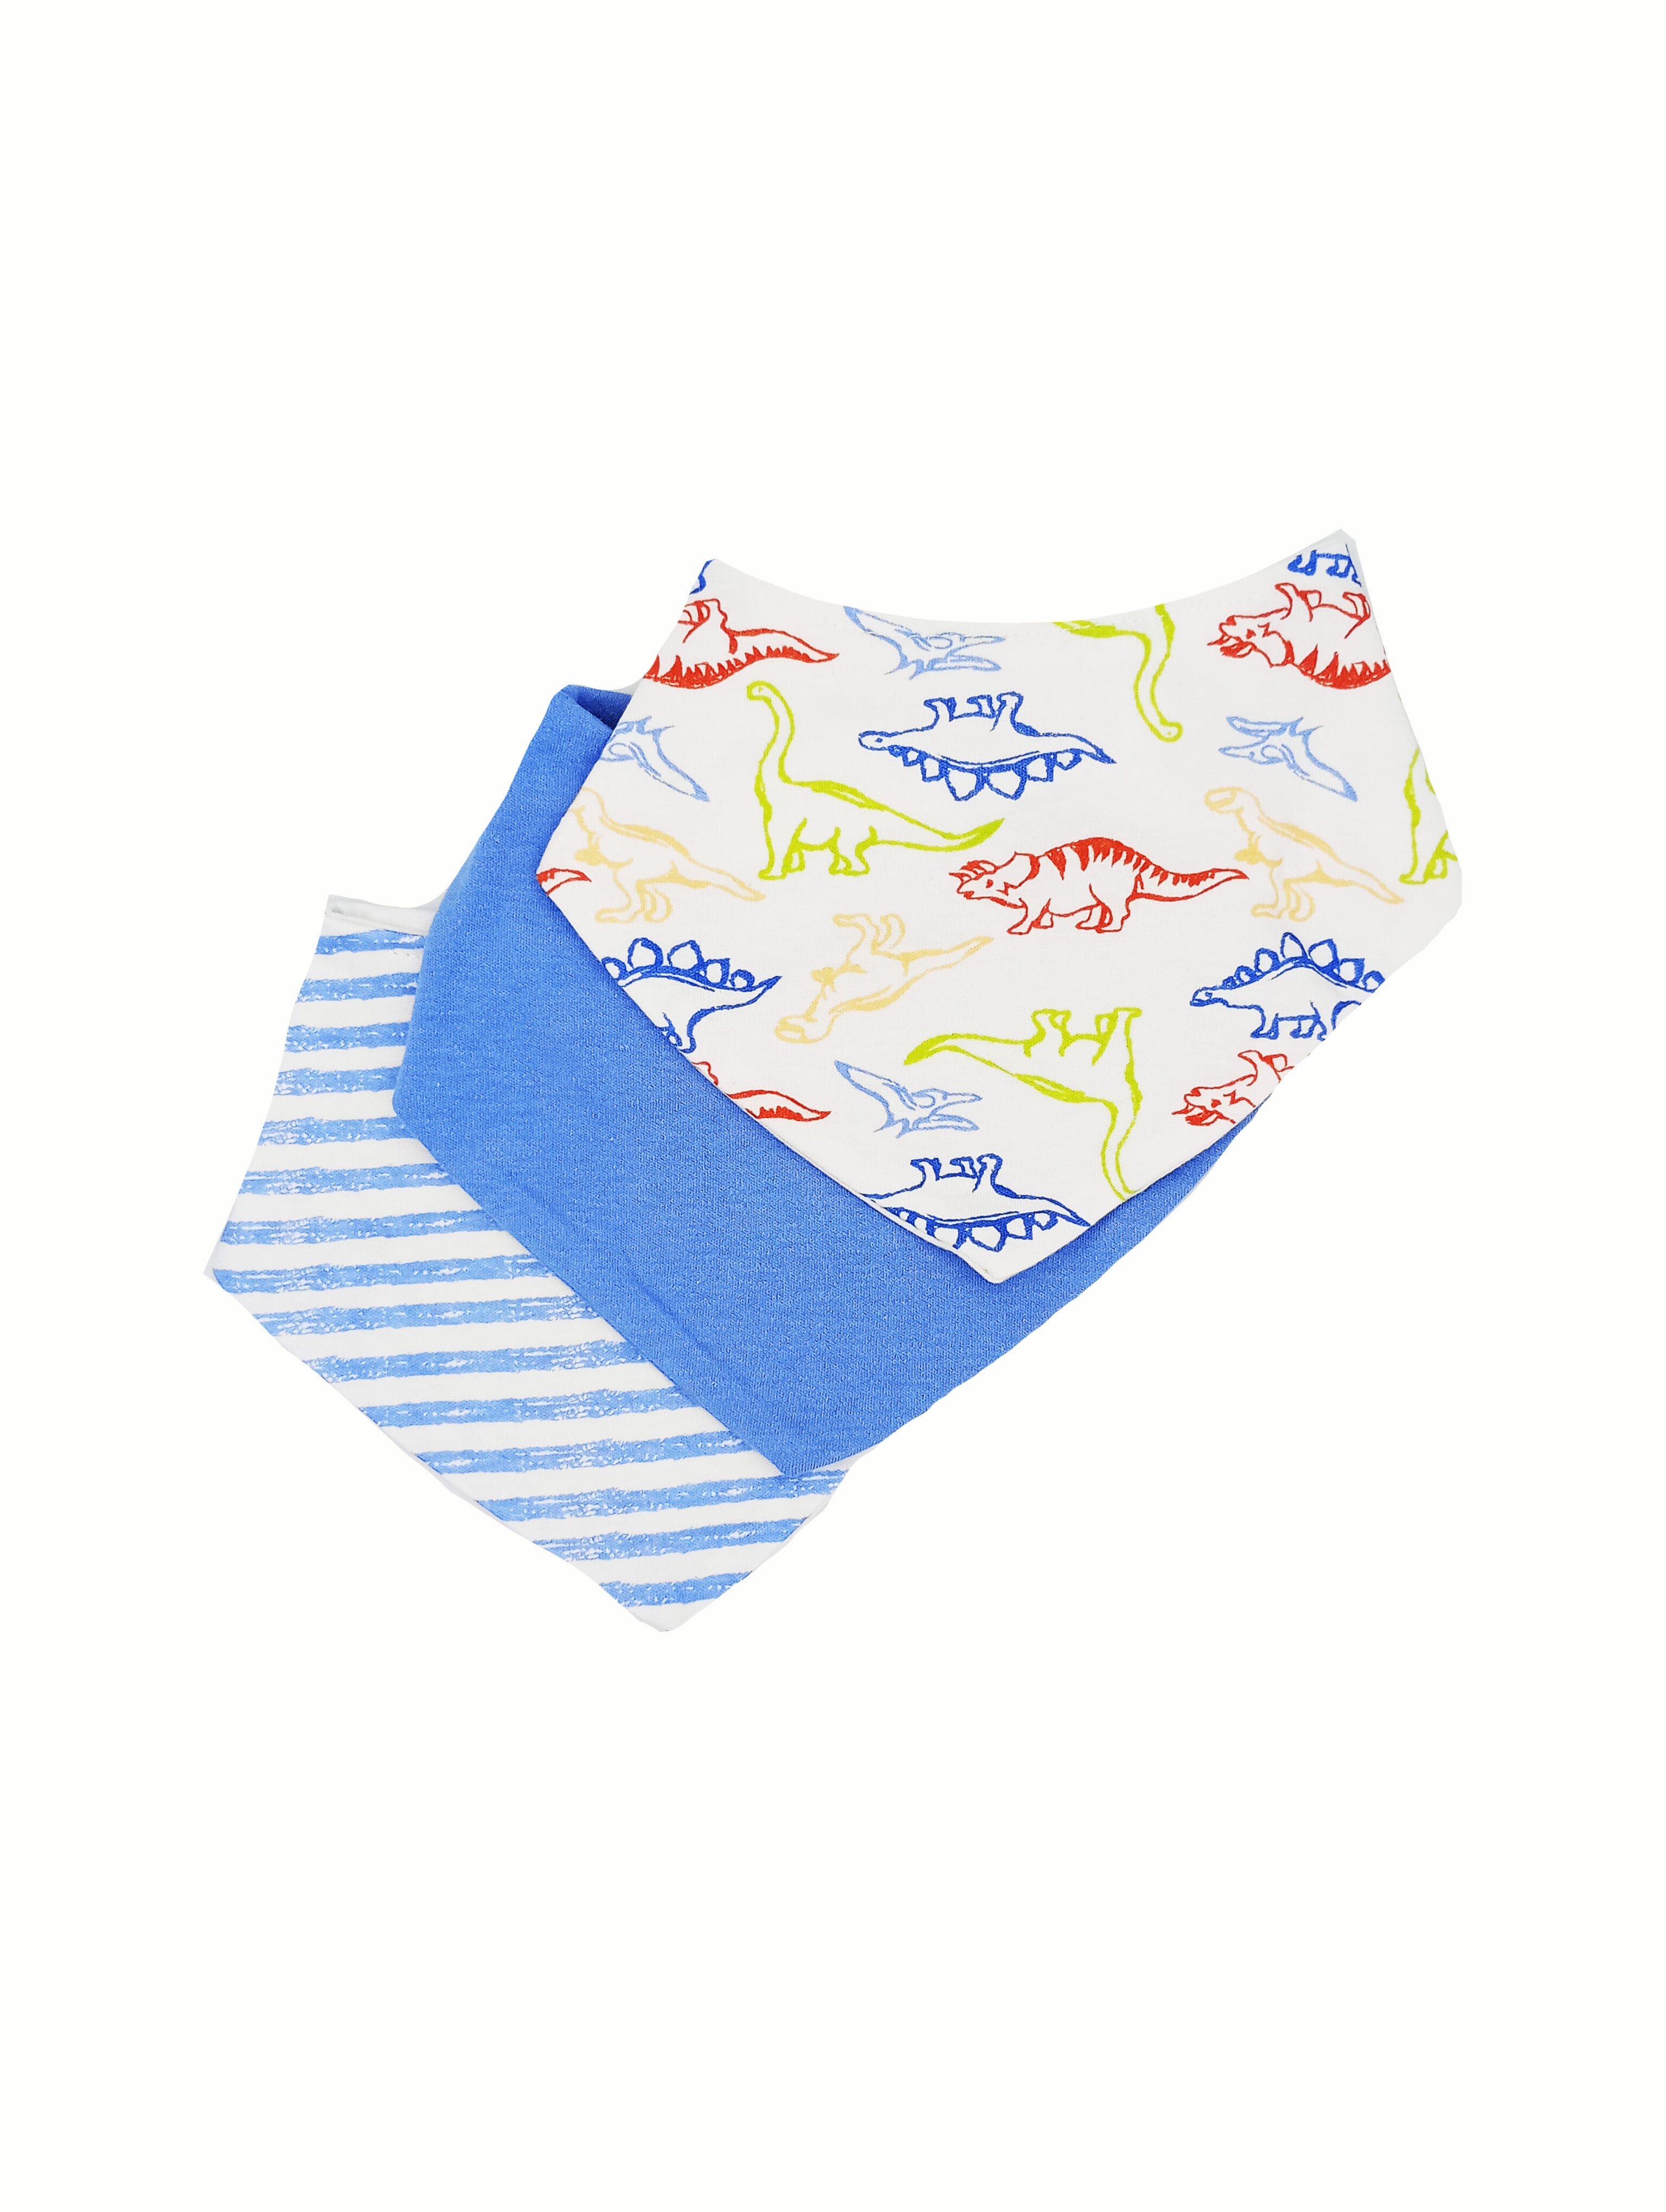 3 Pack Bandana Bibs - Blue/White Stripe and Dinosaur Print - Dribble Bib - Soft Touch